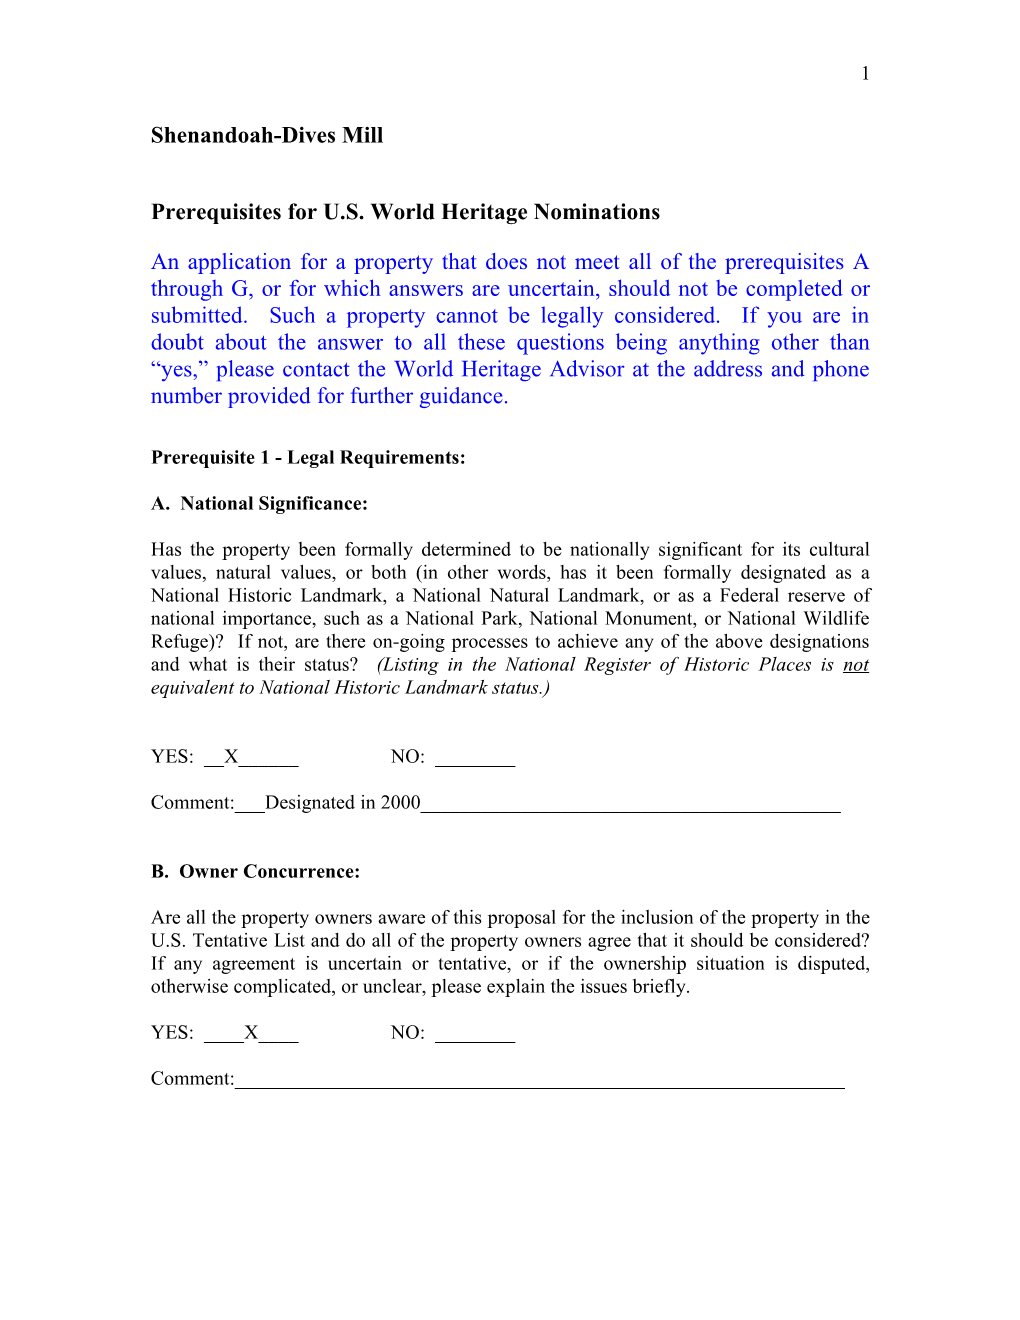 Prerequisites for U.S. World Heritage Nominations